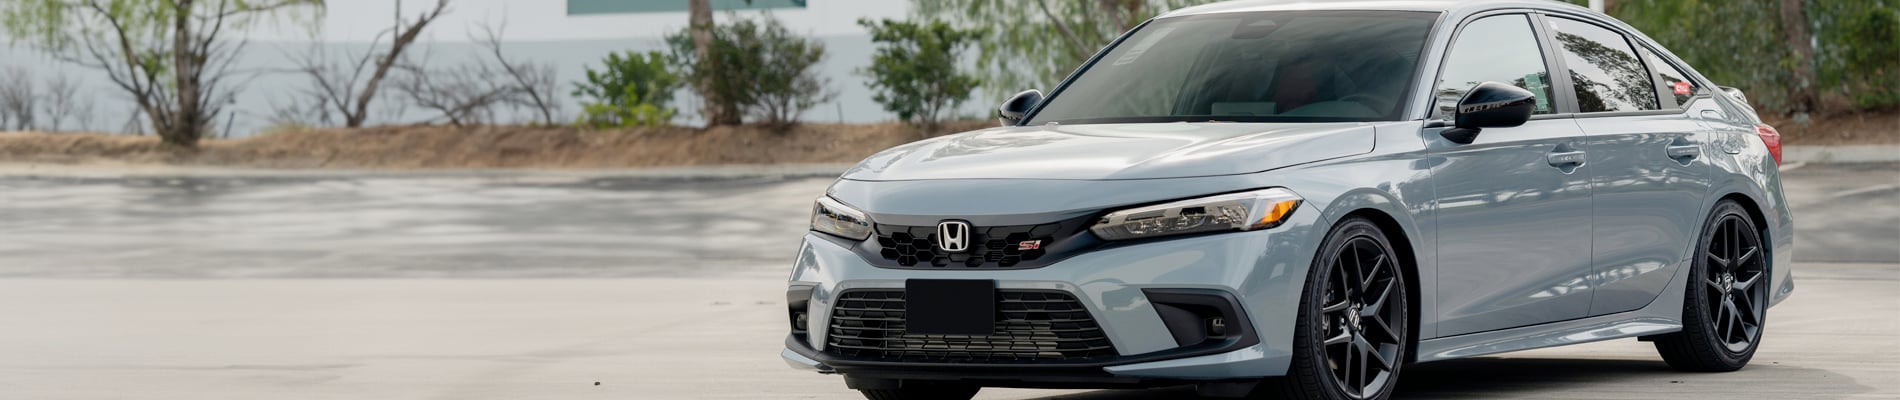 Honda Civic Accessories, Aftermarket Parts, Mods & Upgrades - AutoAccessoriesGarage.com